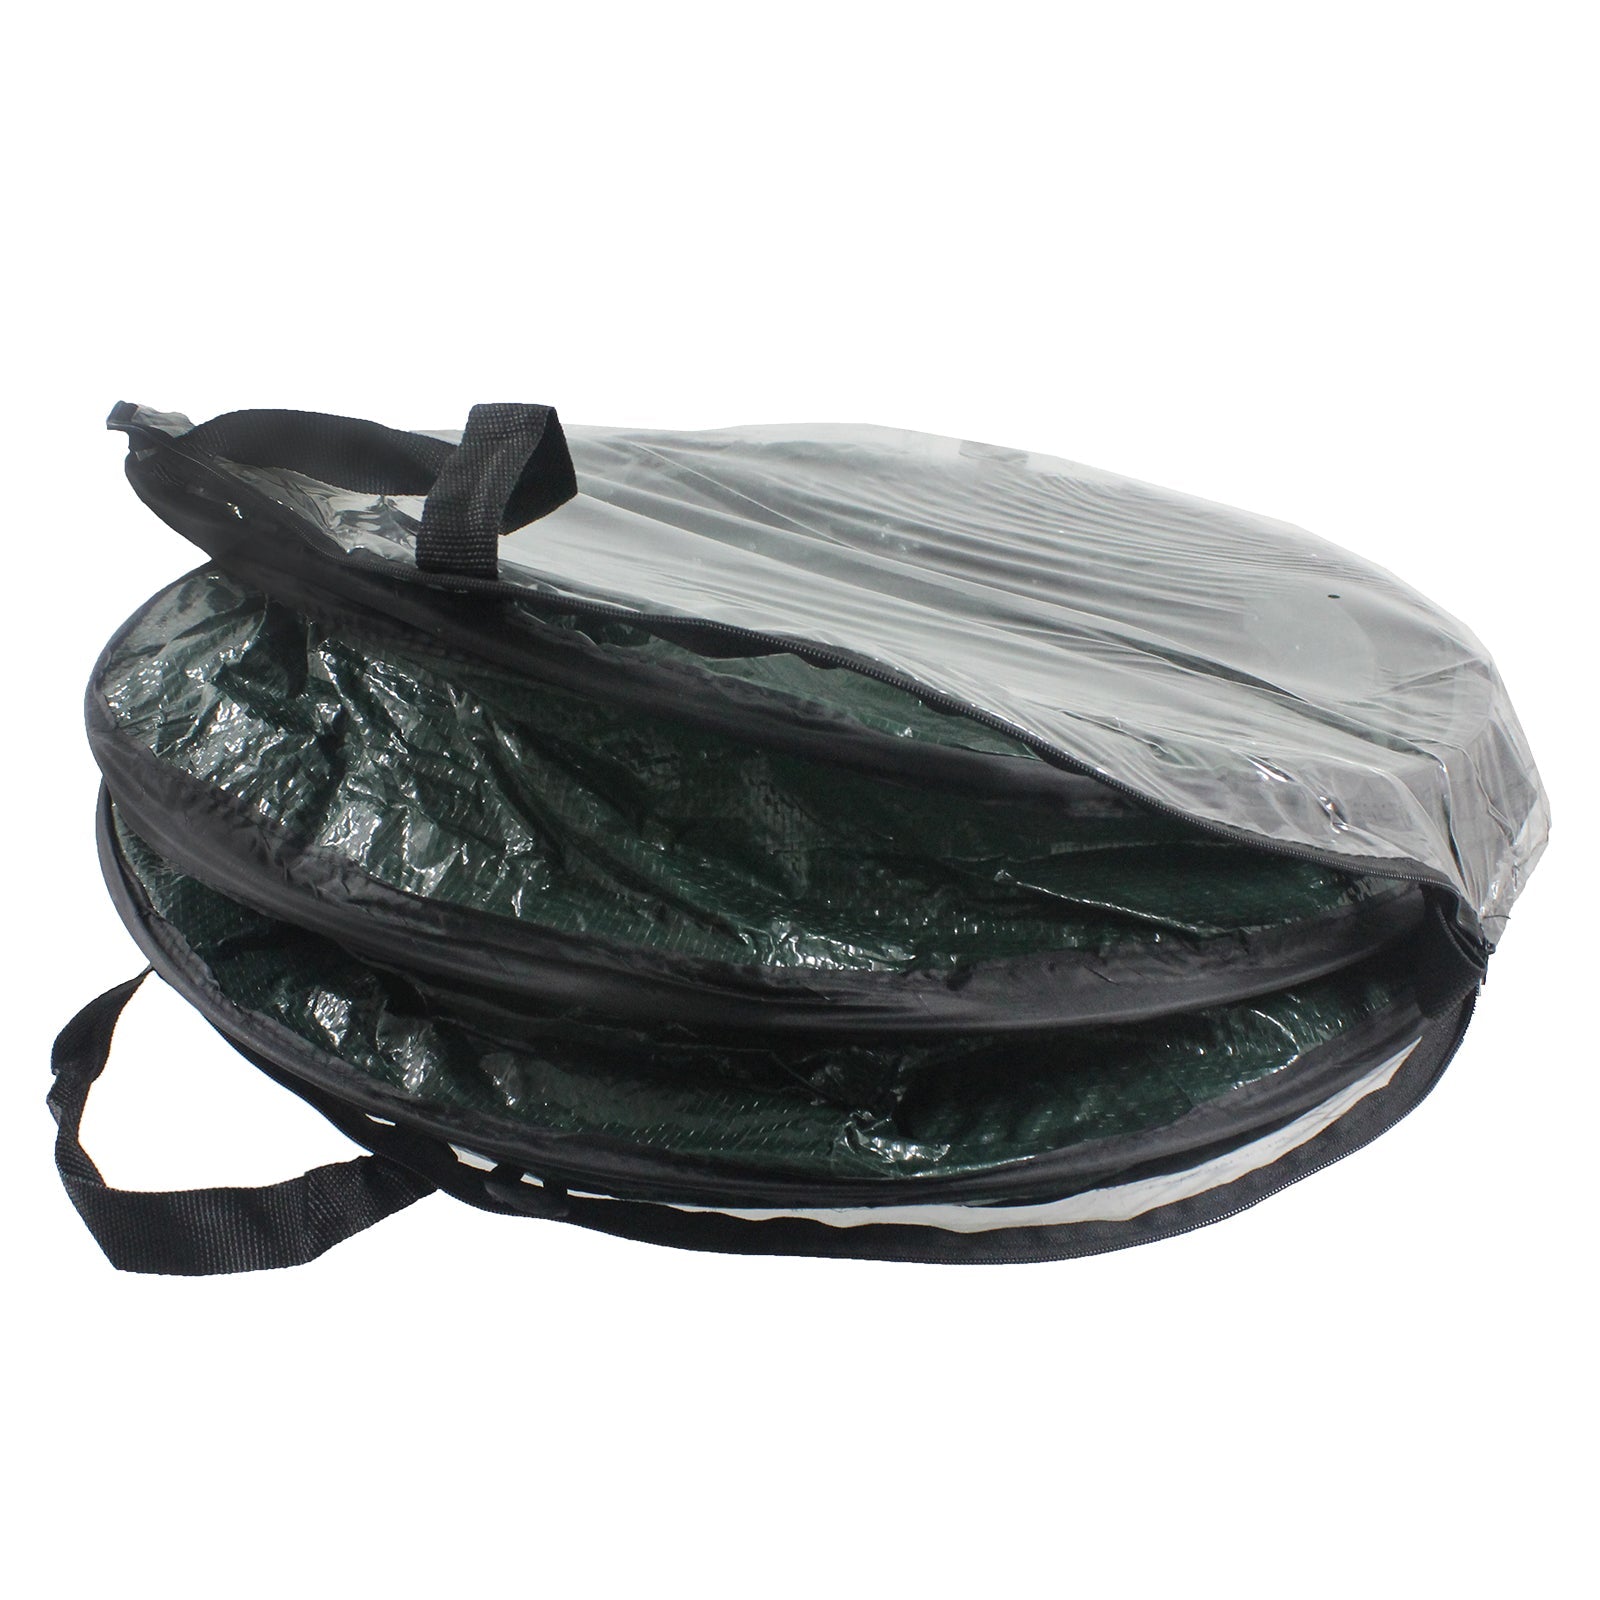 Collapsible Garden Bag Large Reusable Carry Handles Waste Bin Refuse Sack 90L x 2